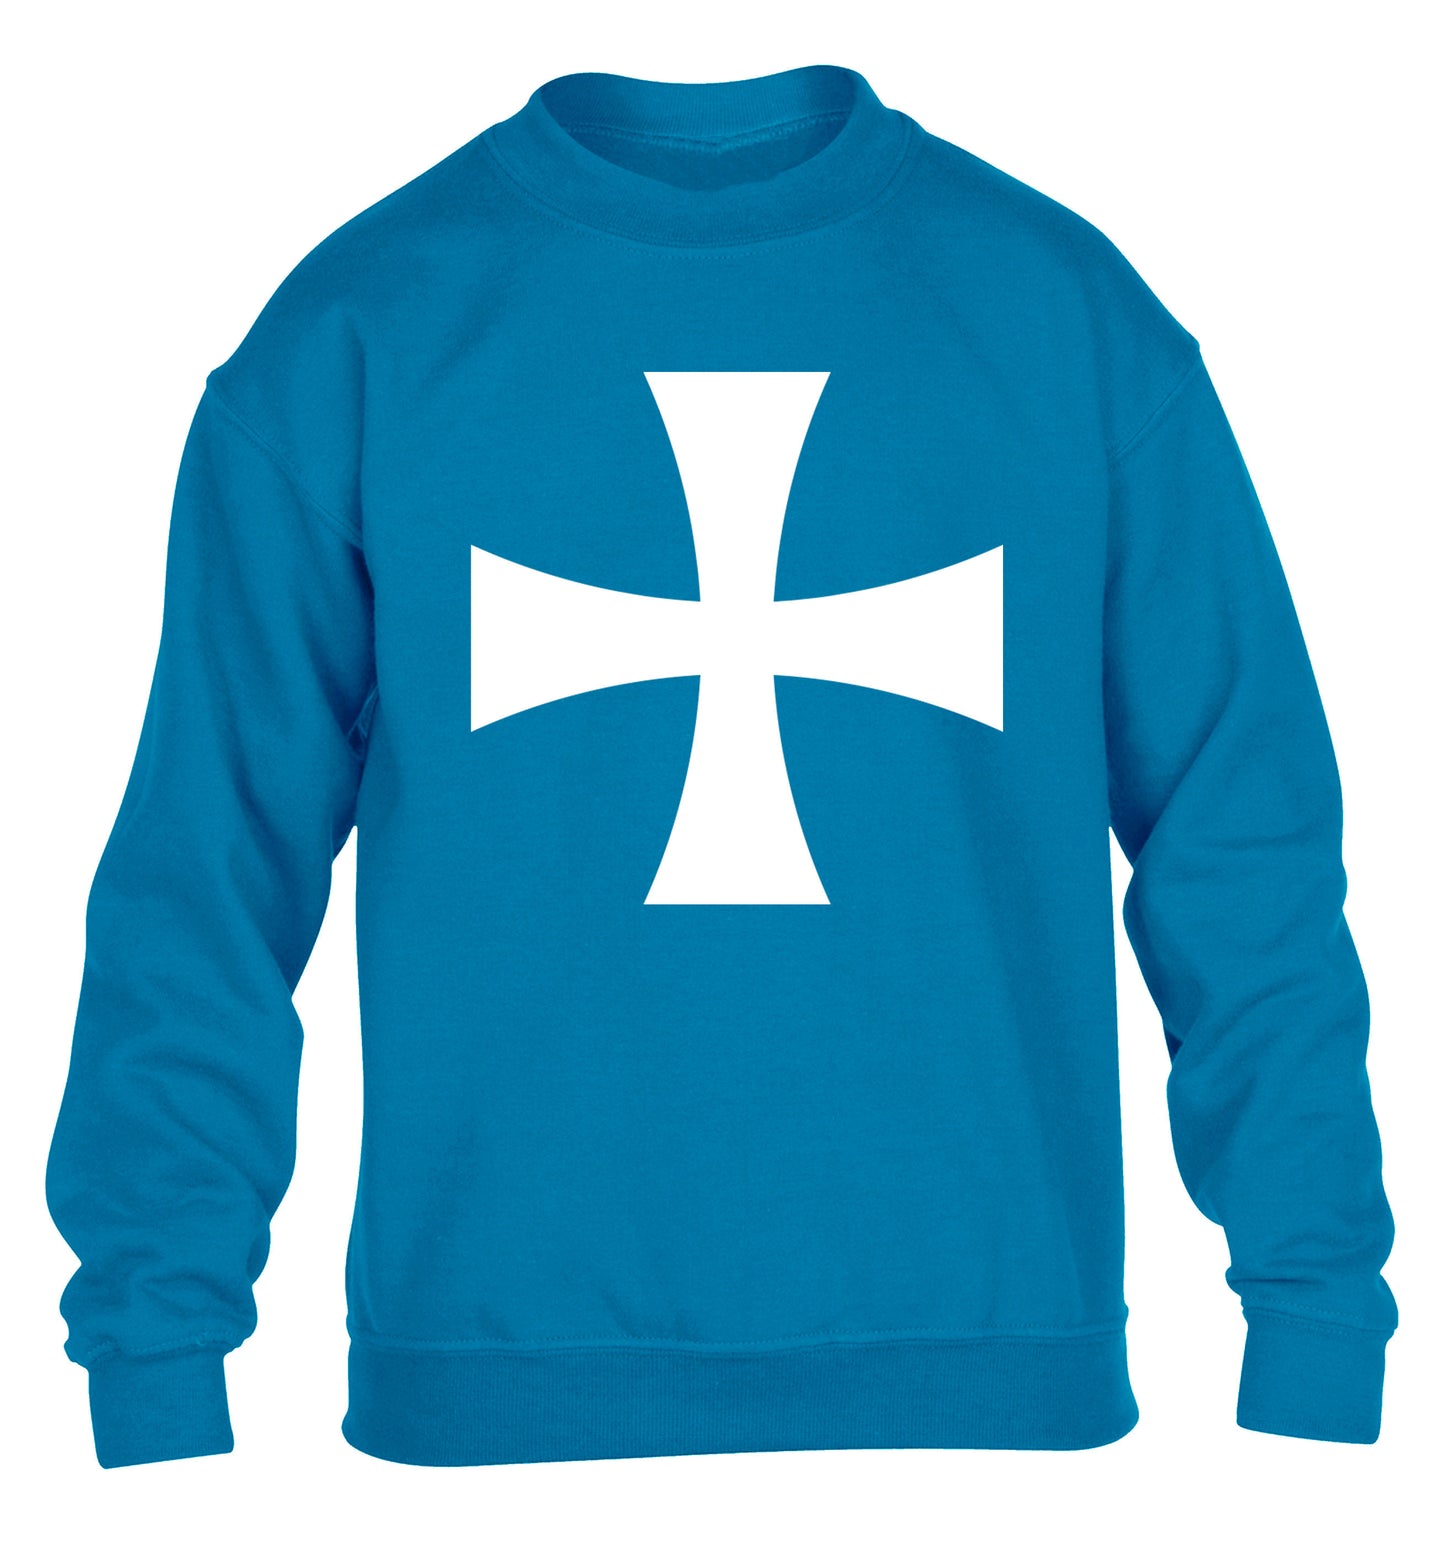 Knights Templar cross children's blue sweater 12-14 Years